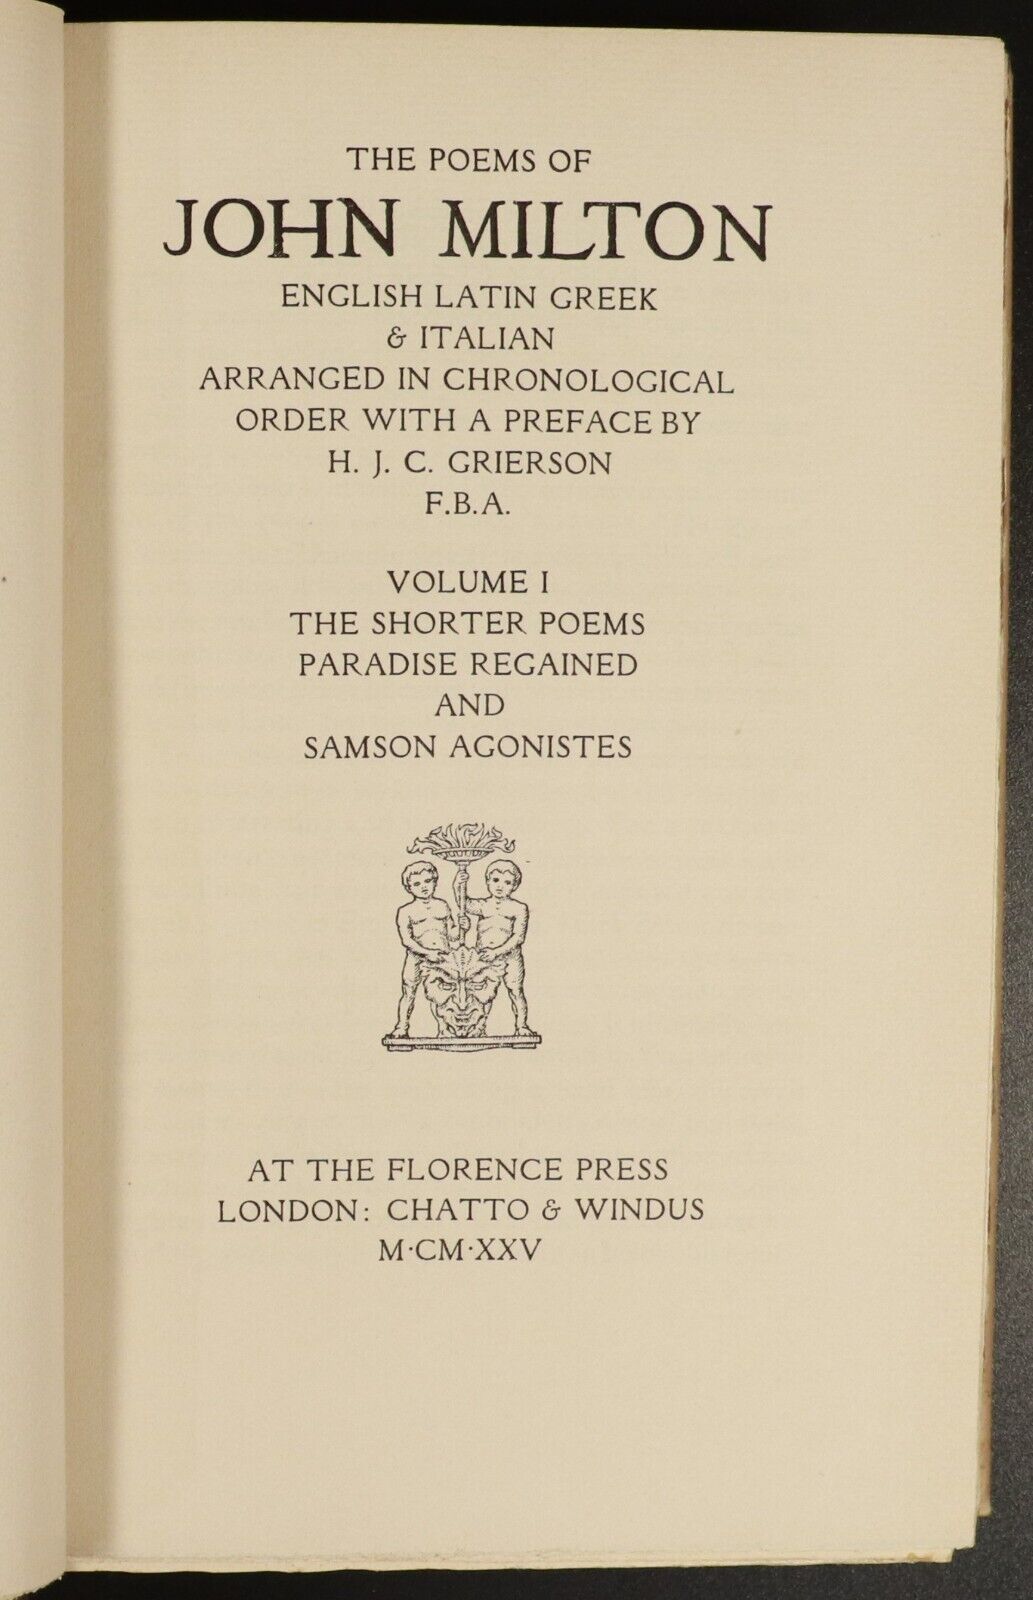 1925 2vol The Poems Of John Milton Antique British Poetry Book Set Pages Uncut - 0